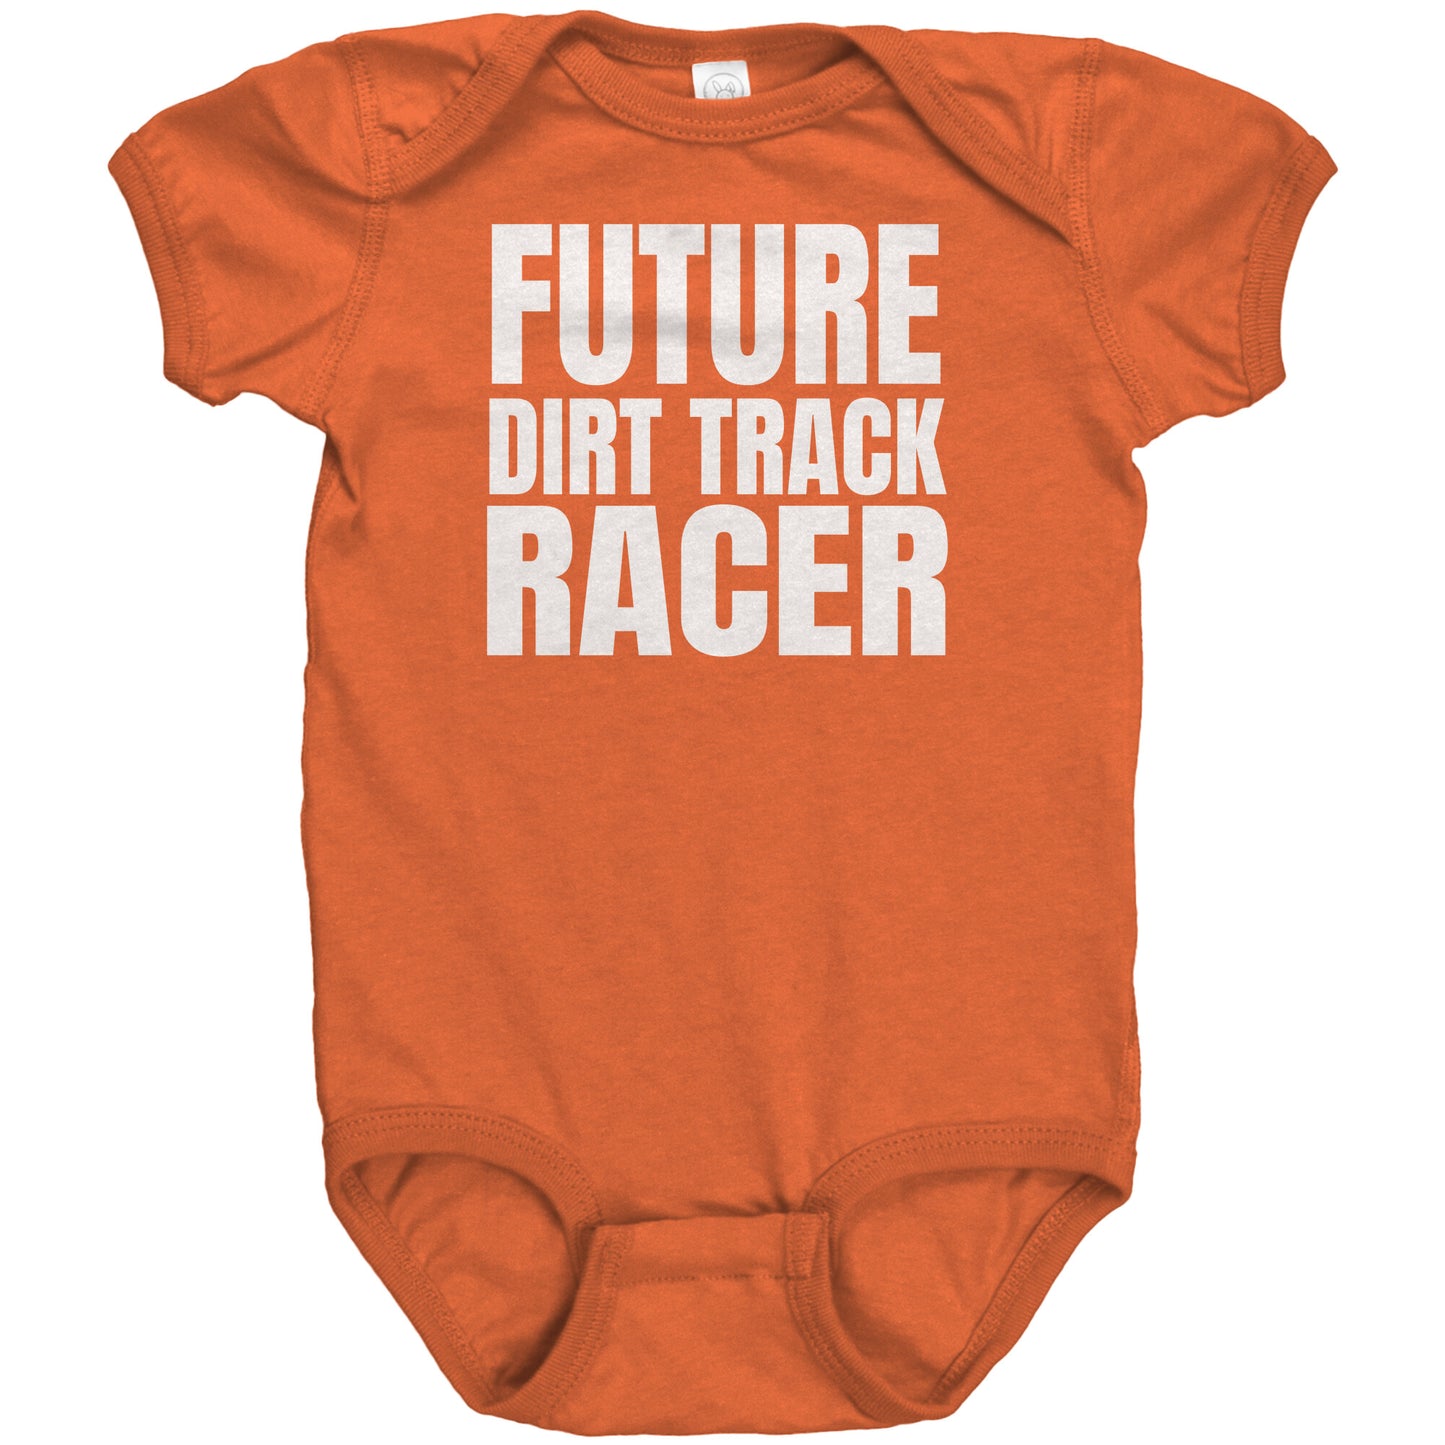 FUTURE DIRT TRACK RACER INFANT BODYSUIT